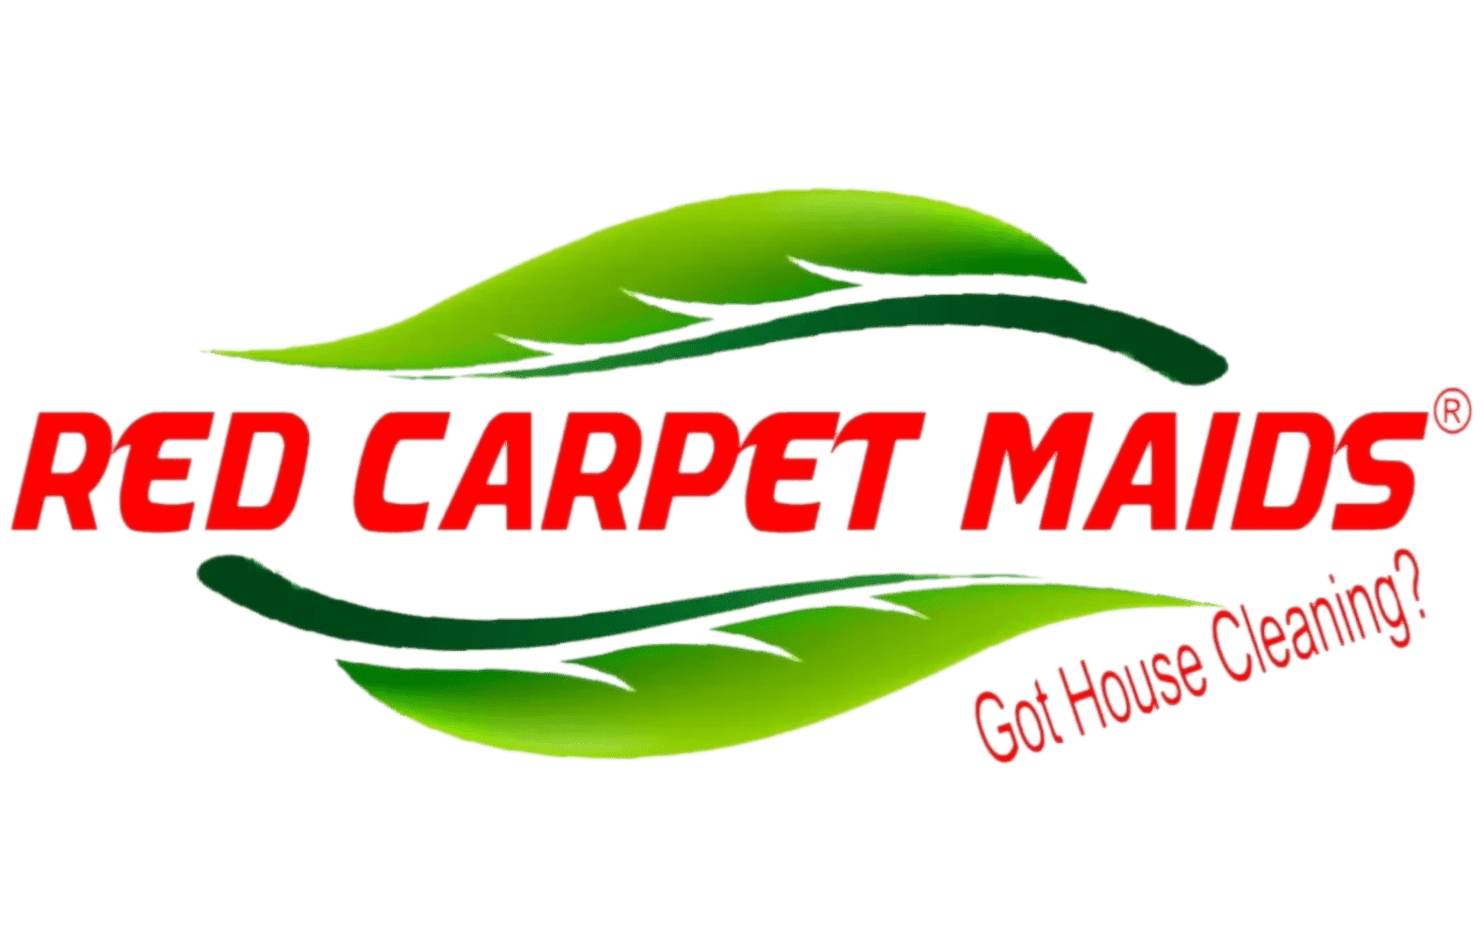 Red Carpet Maids